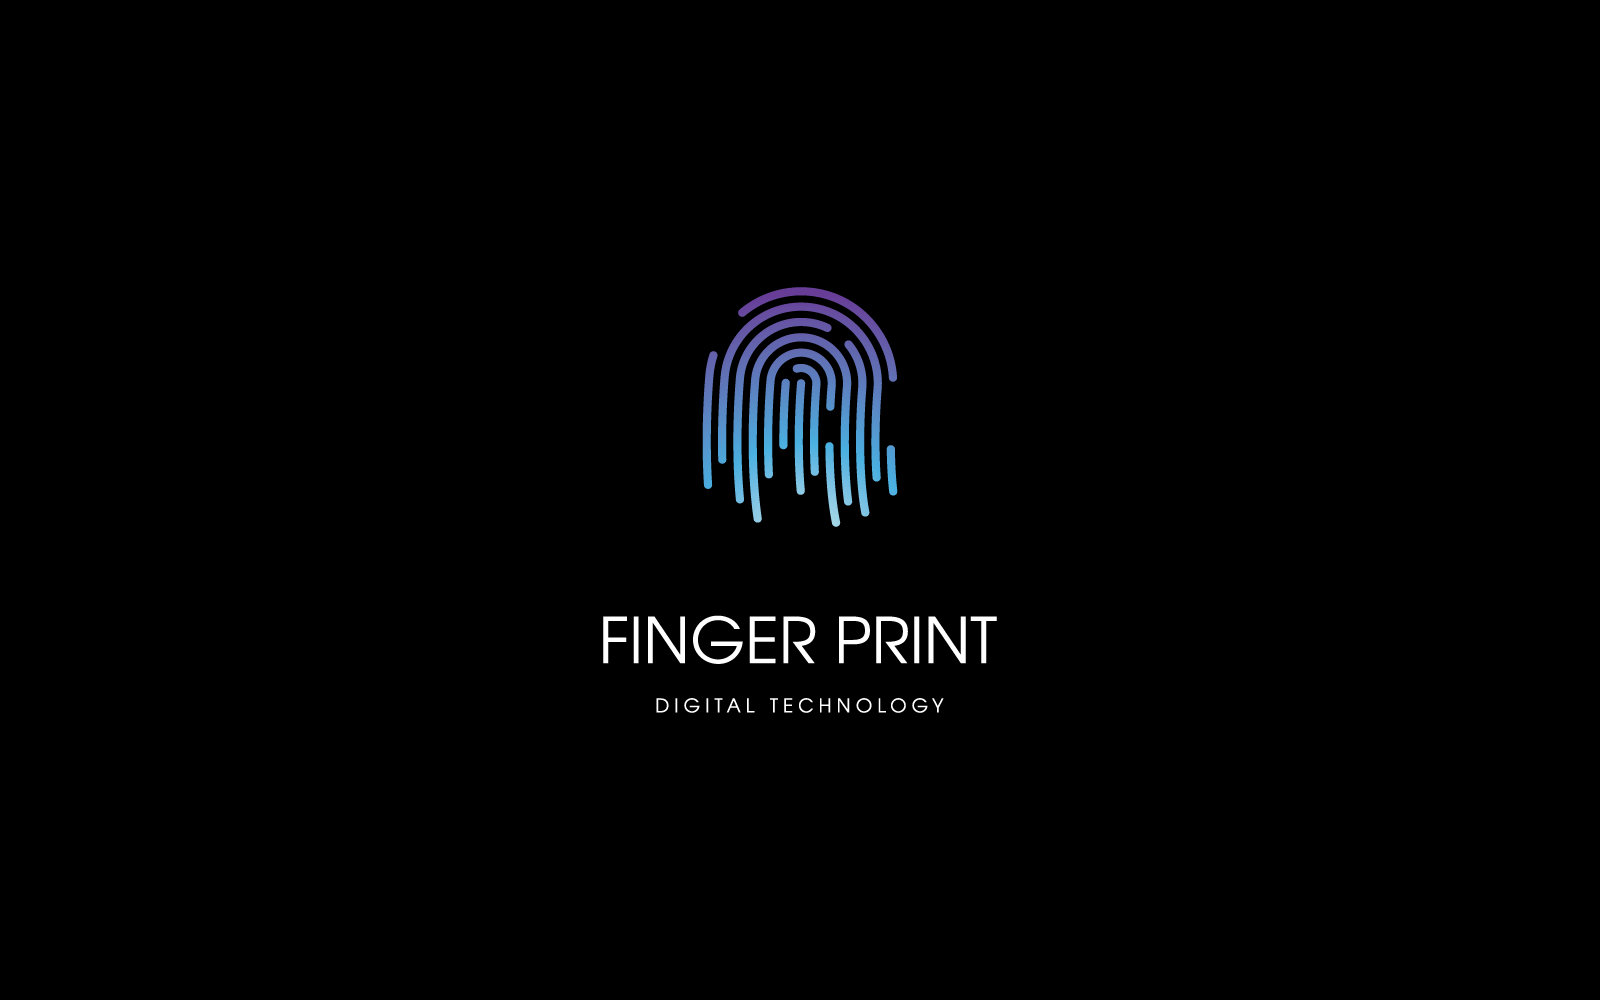 Fingerprint technology design logo vector template